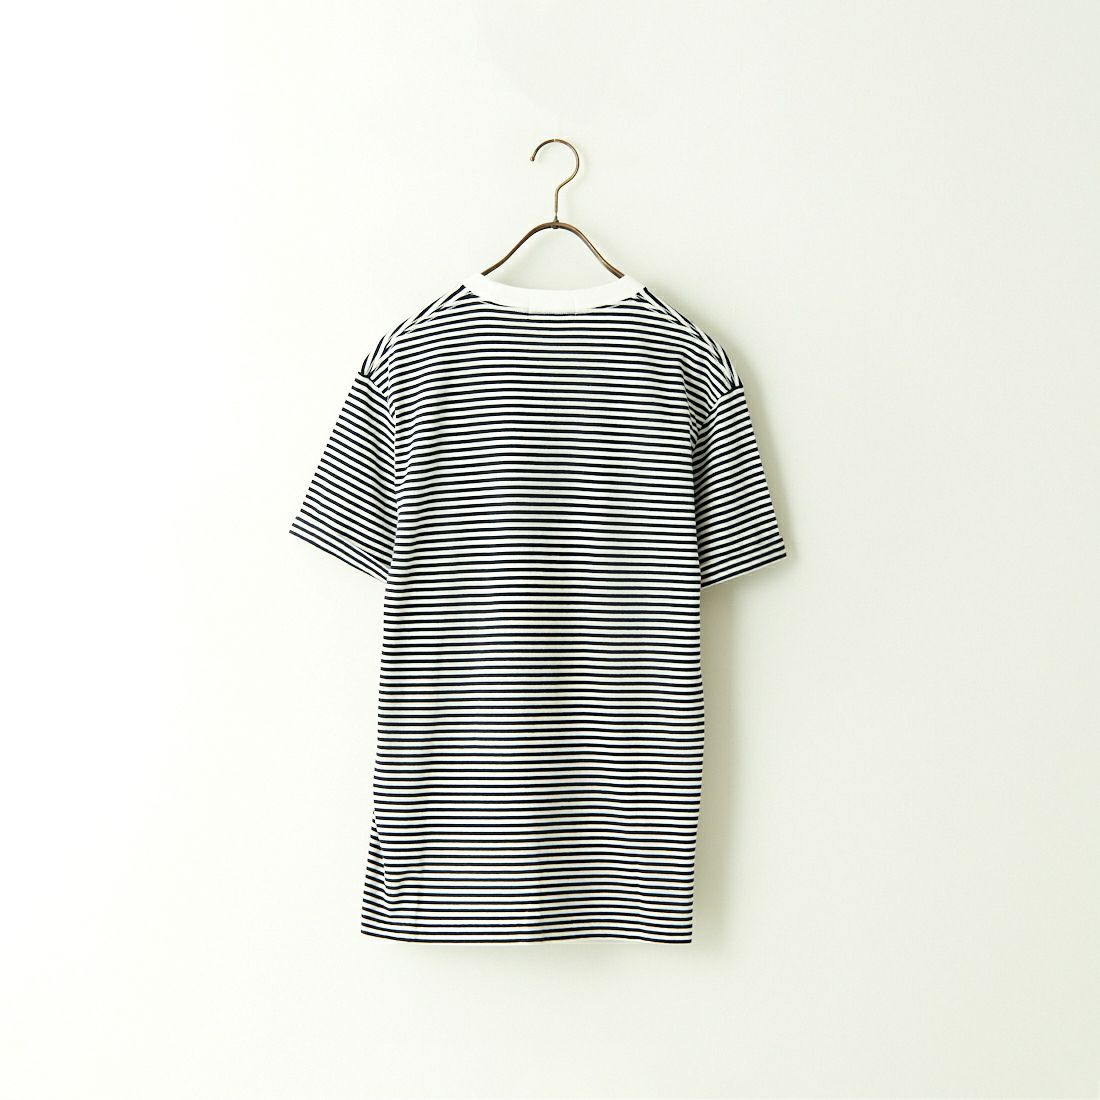 Gymphlex [ジムフレックス] ロールアップスリーブ ロゴ刺繍Tシャツ [J-1155CH] WHT/NVY ST